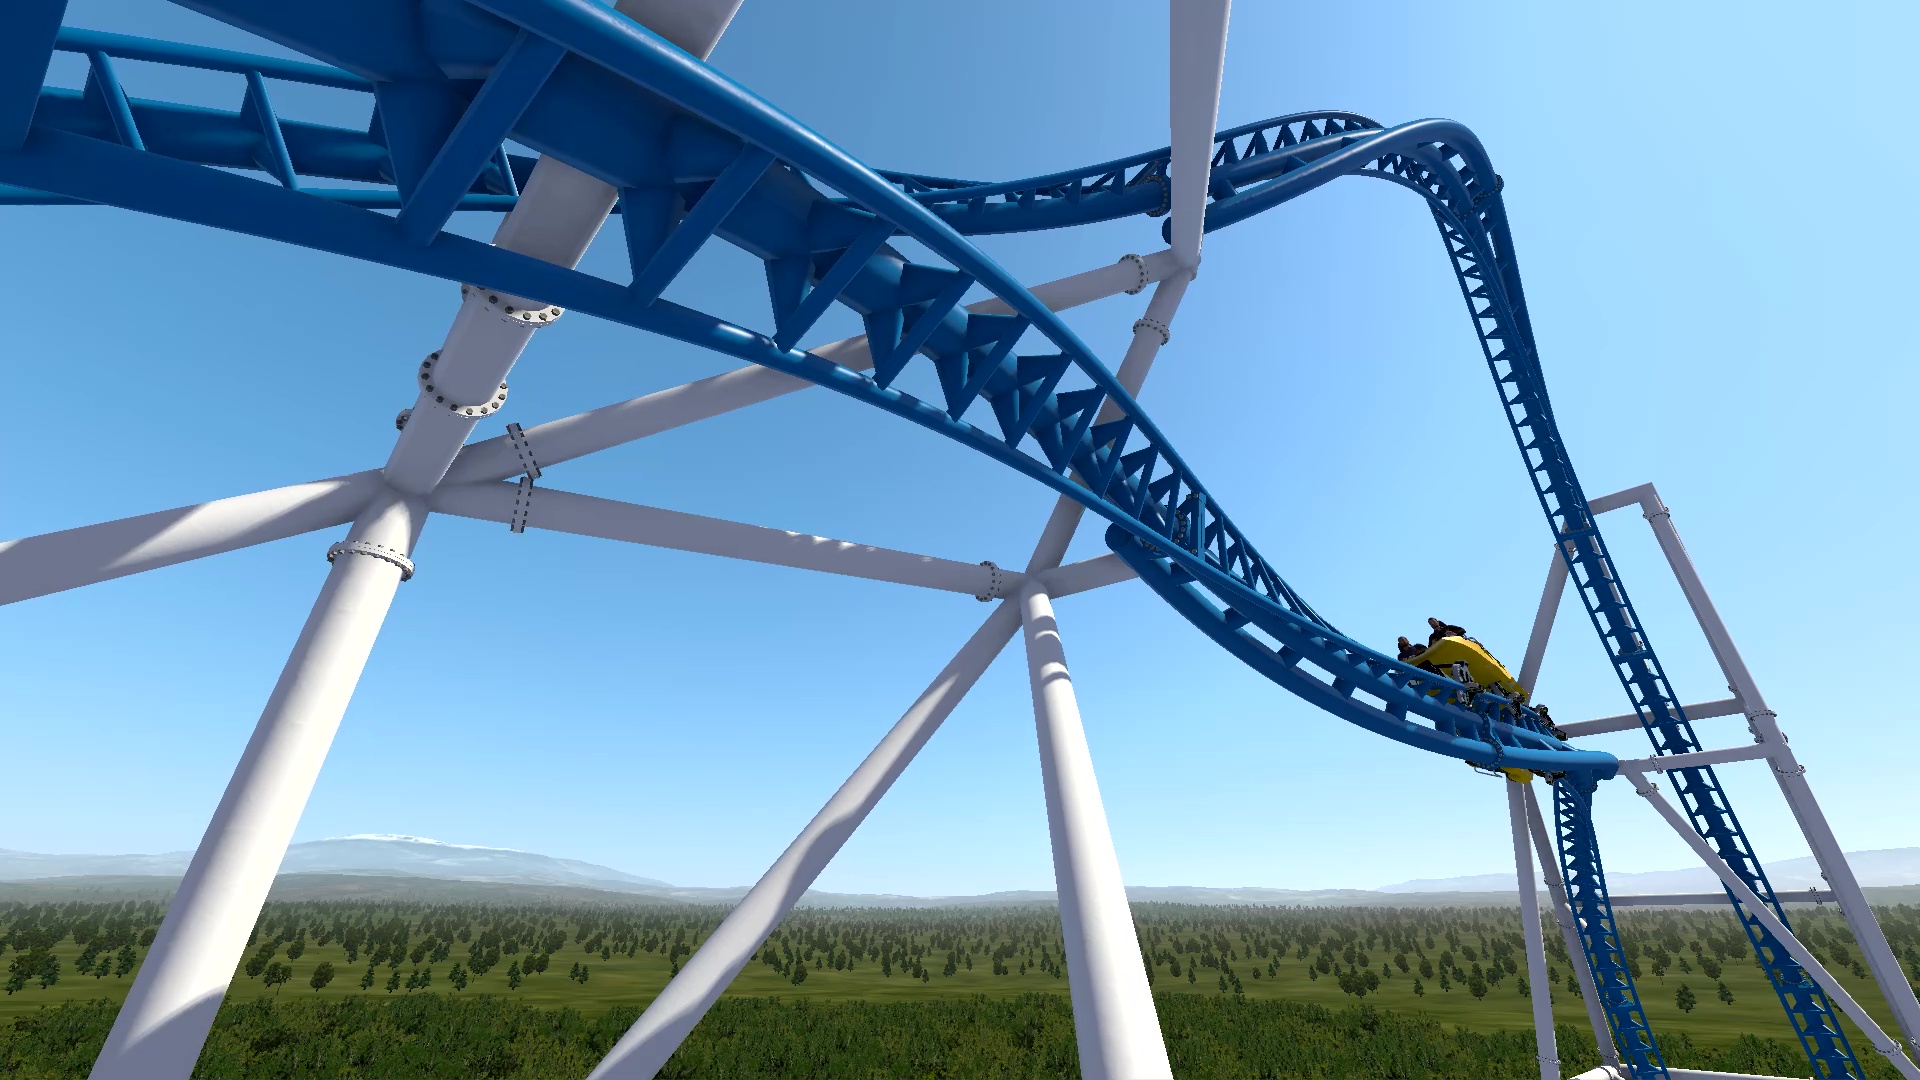 Vertical LSM Roller Coaster, Compact LSM Launch Coaster